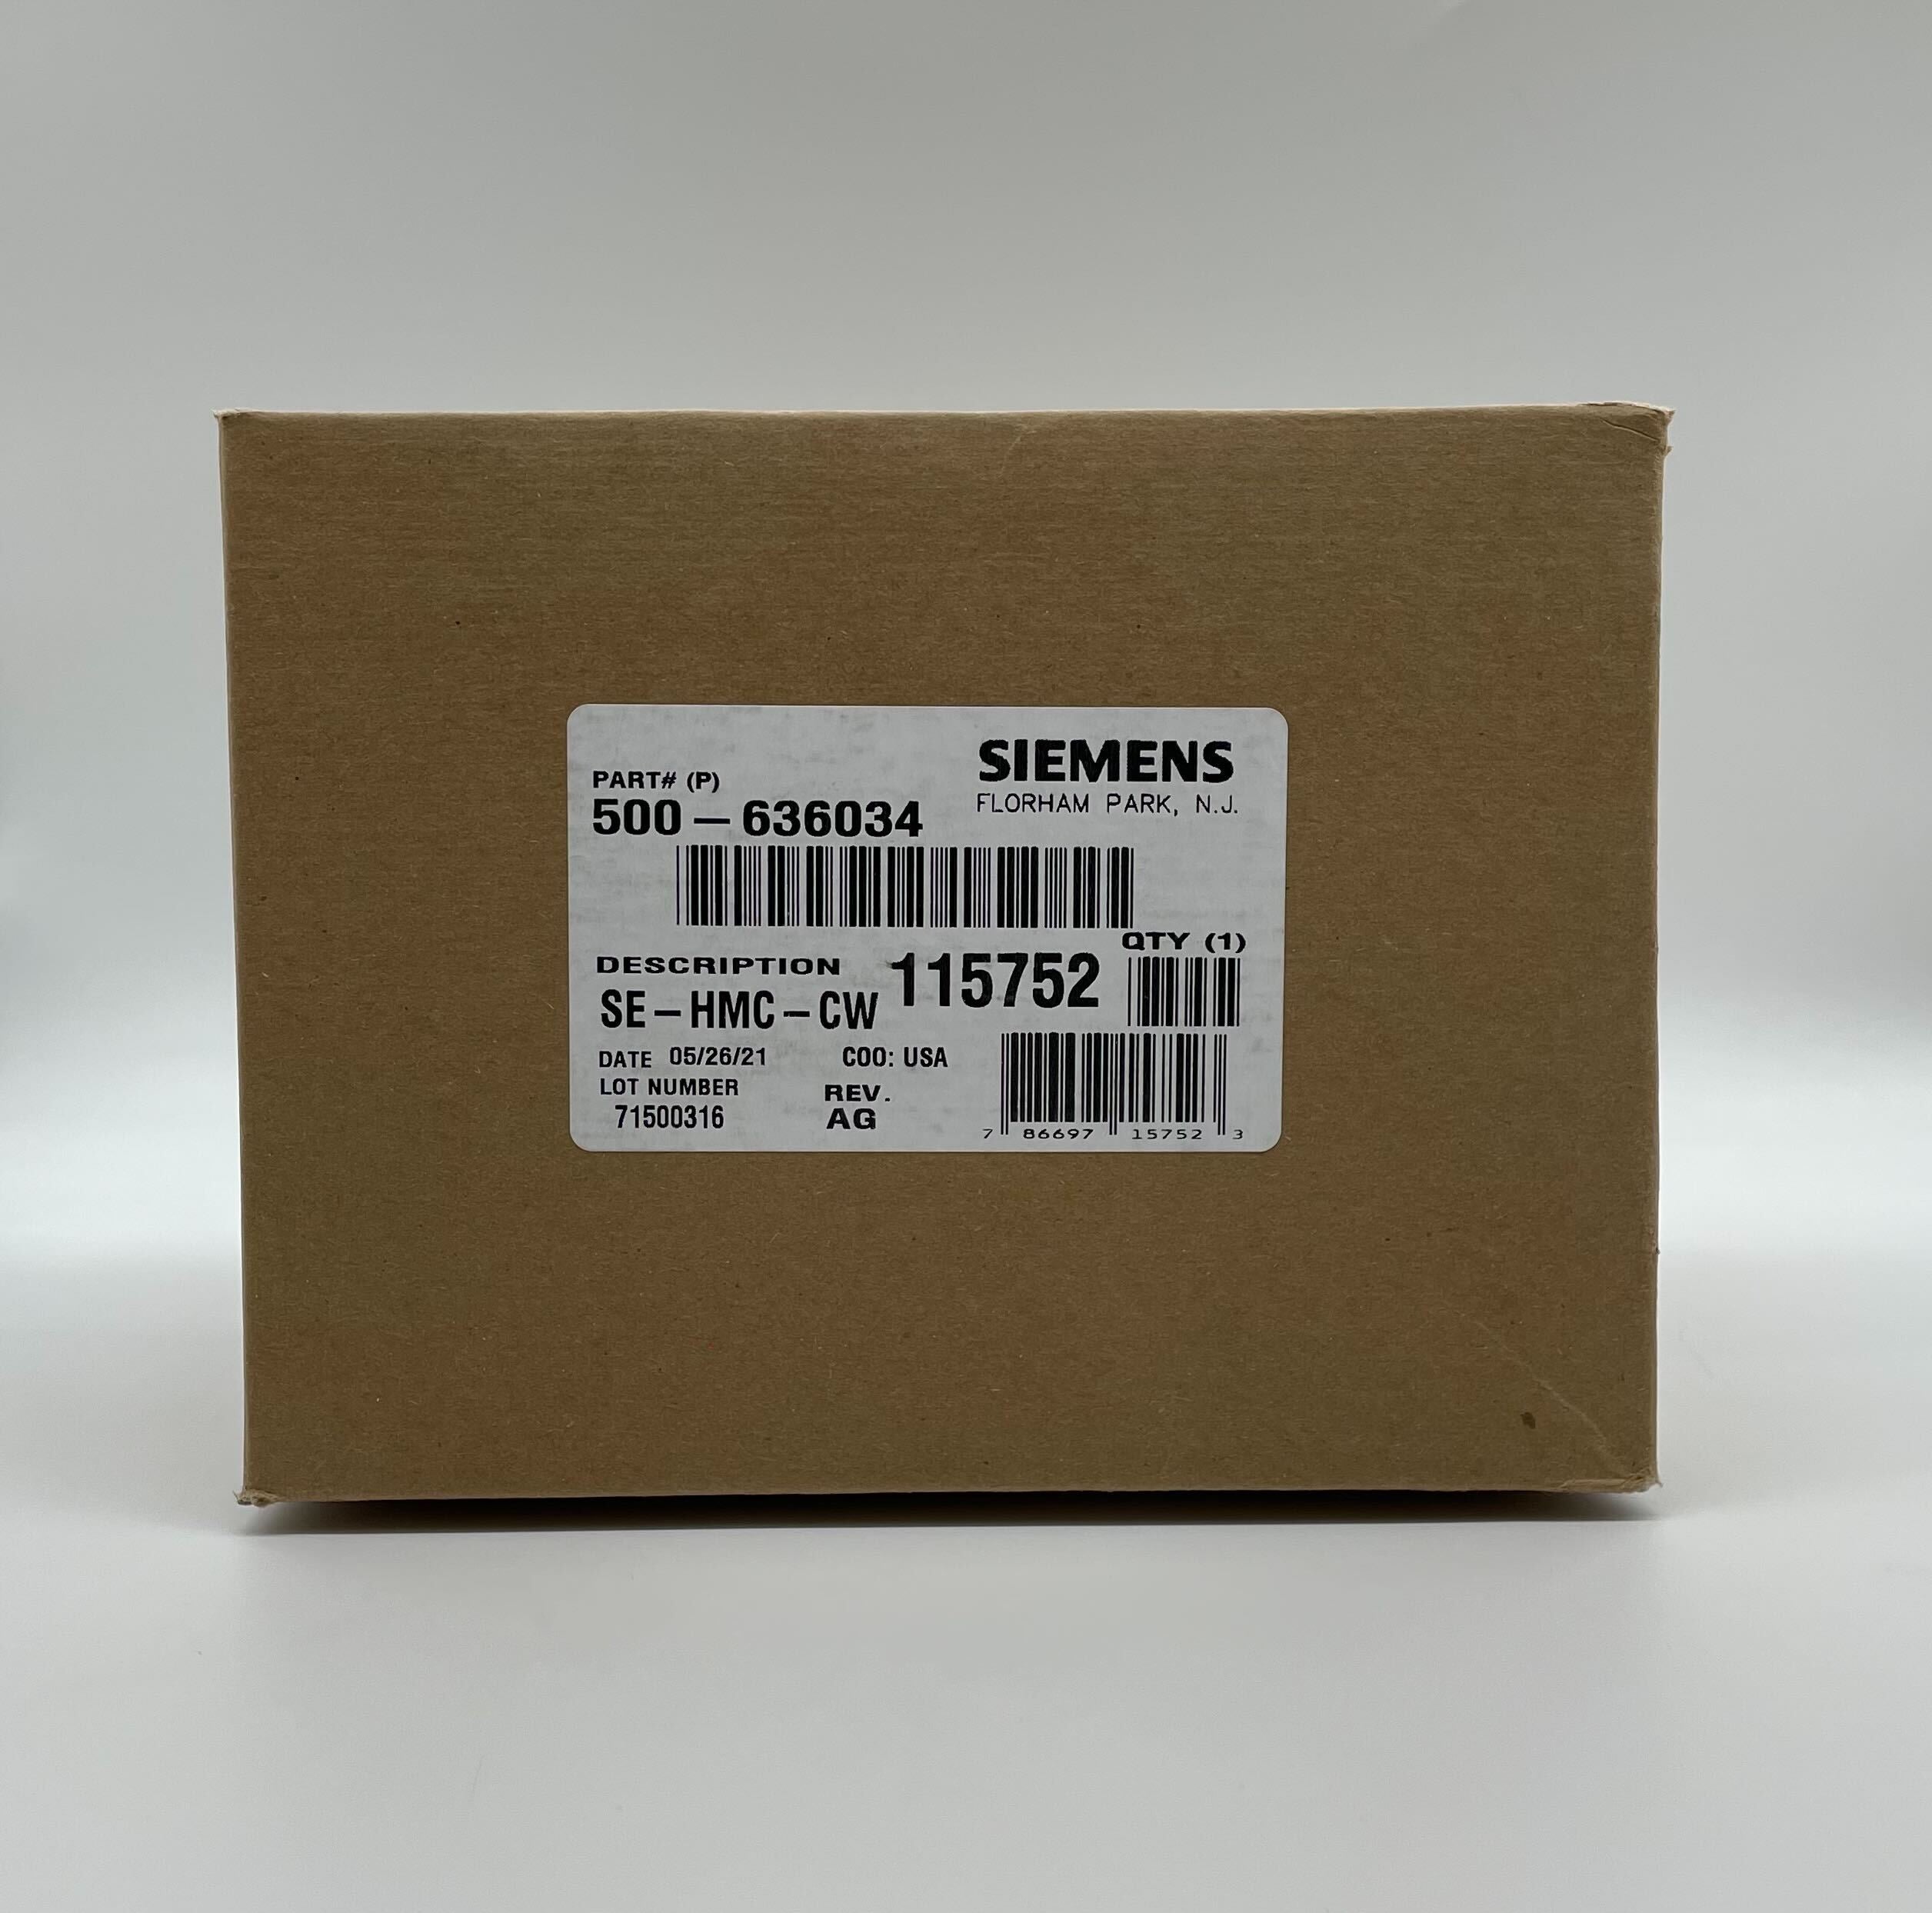 Siemens SE-HMC-CW